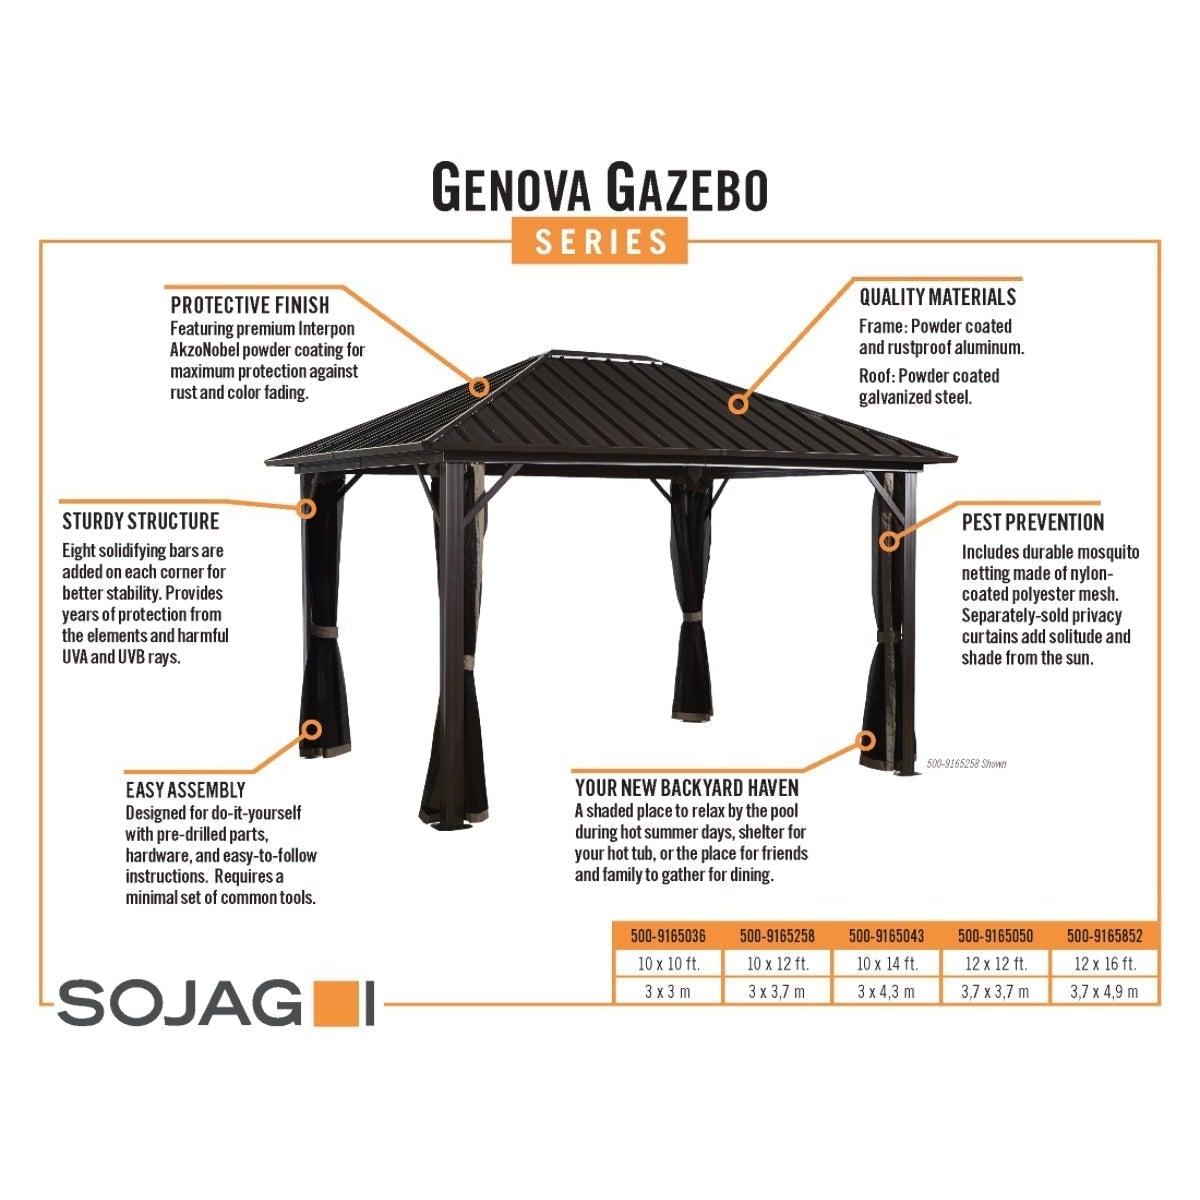 Sojag Genova Gazebo 12 x 16 ft - Delightful Yard